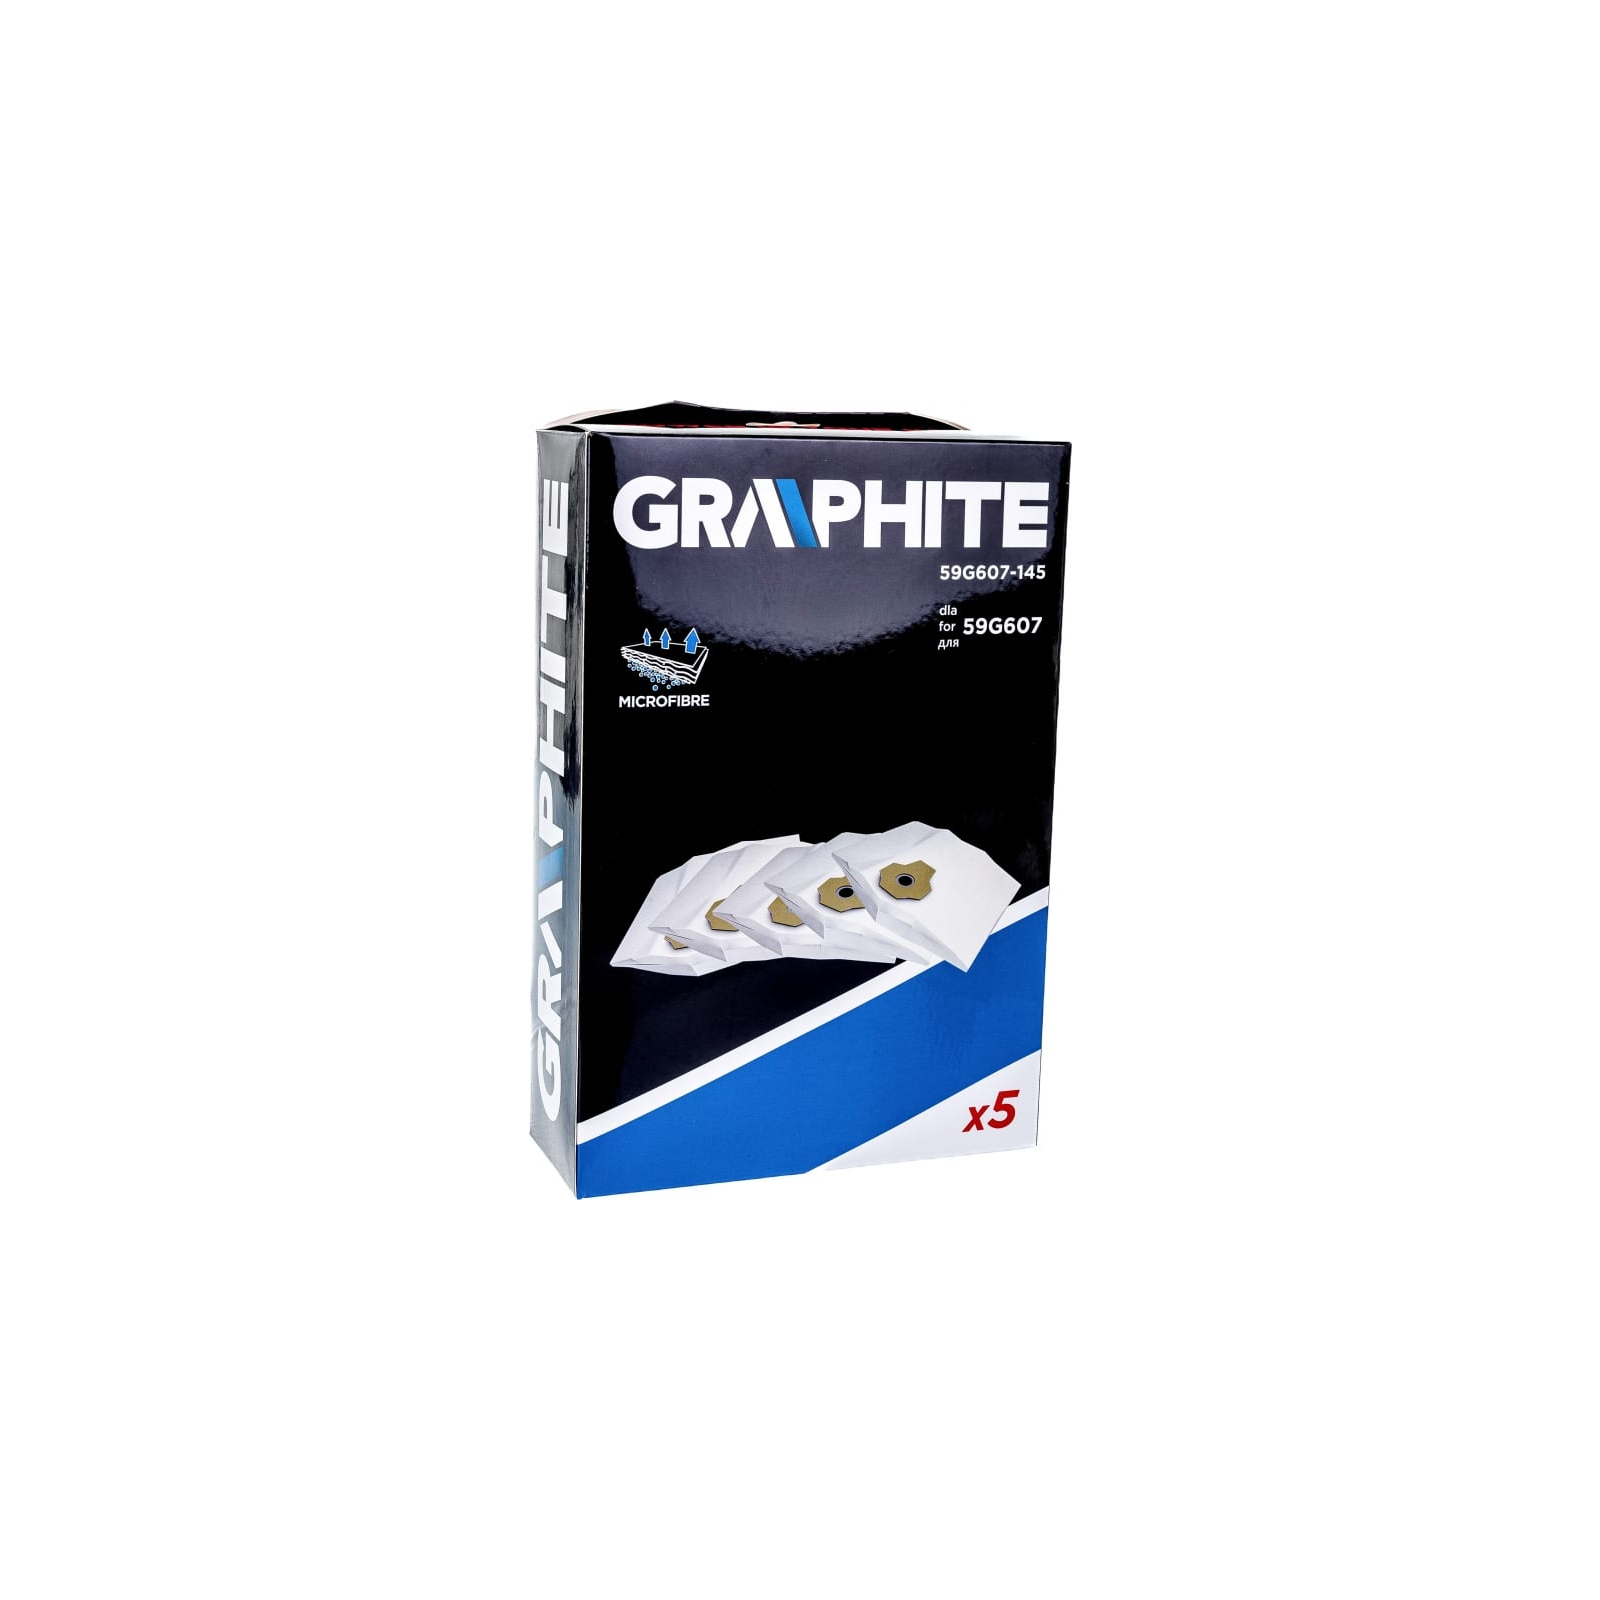 Мішок для пилососу Graphite мешки для полесоса 59G607, 5 шт (59G607-145) зображення 4